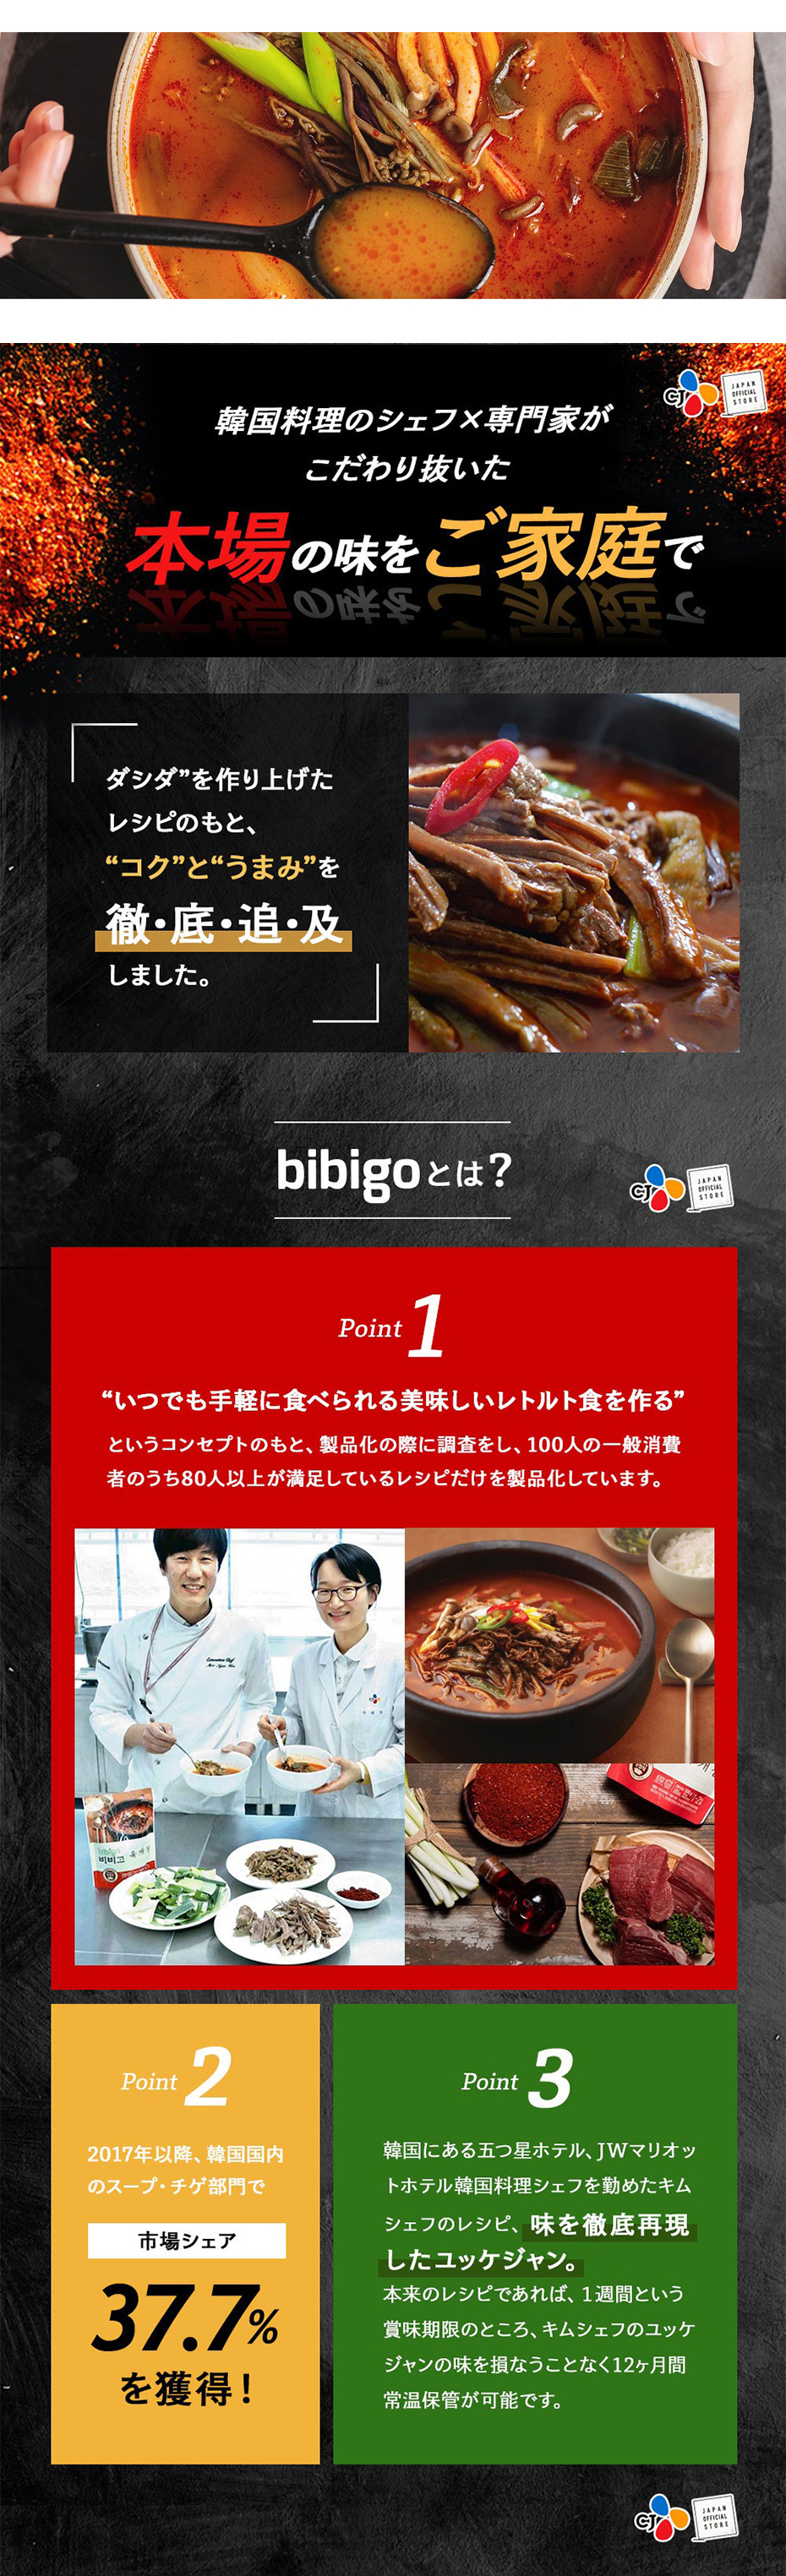 bibigo 韓飯 ユッケジャン500g